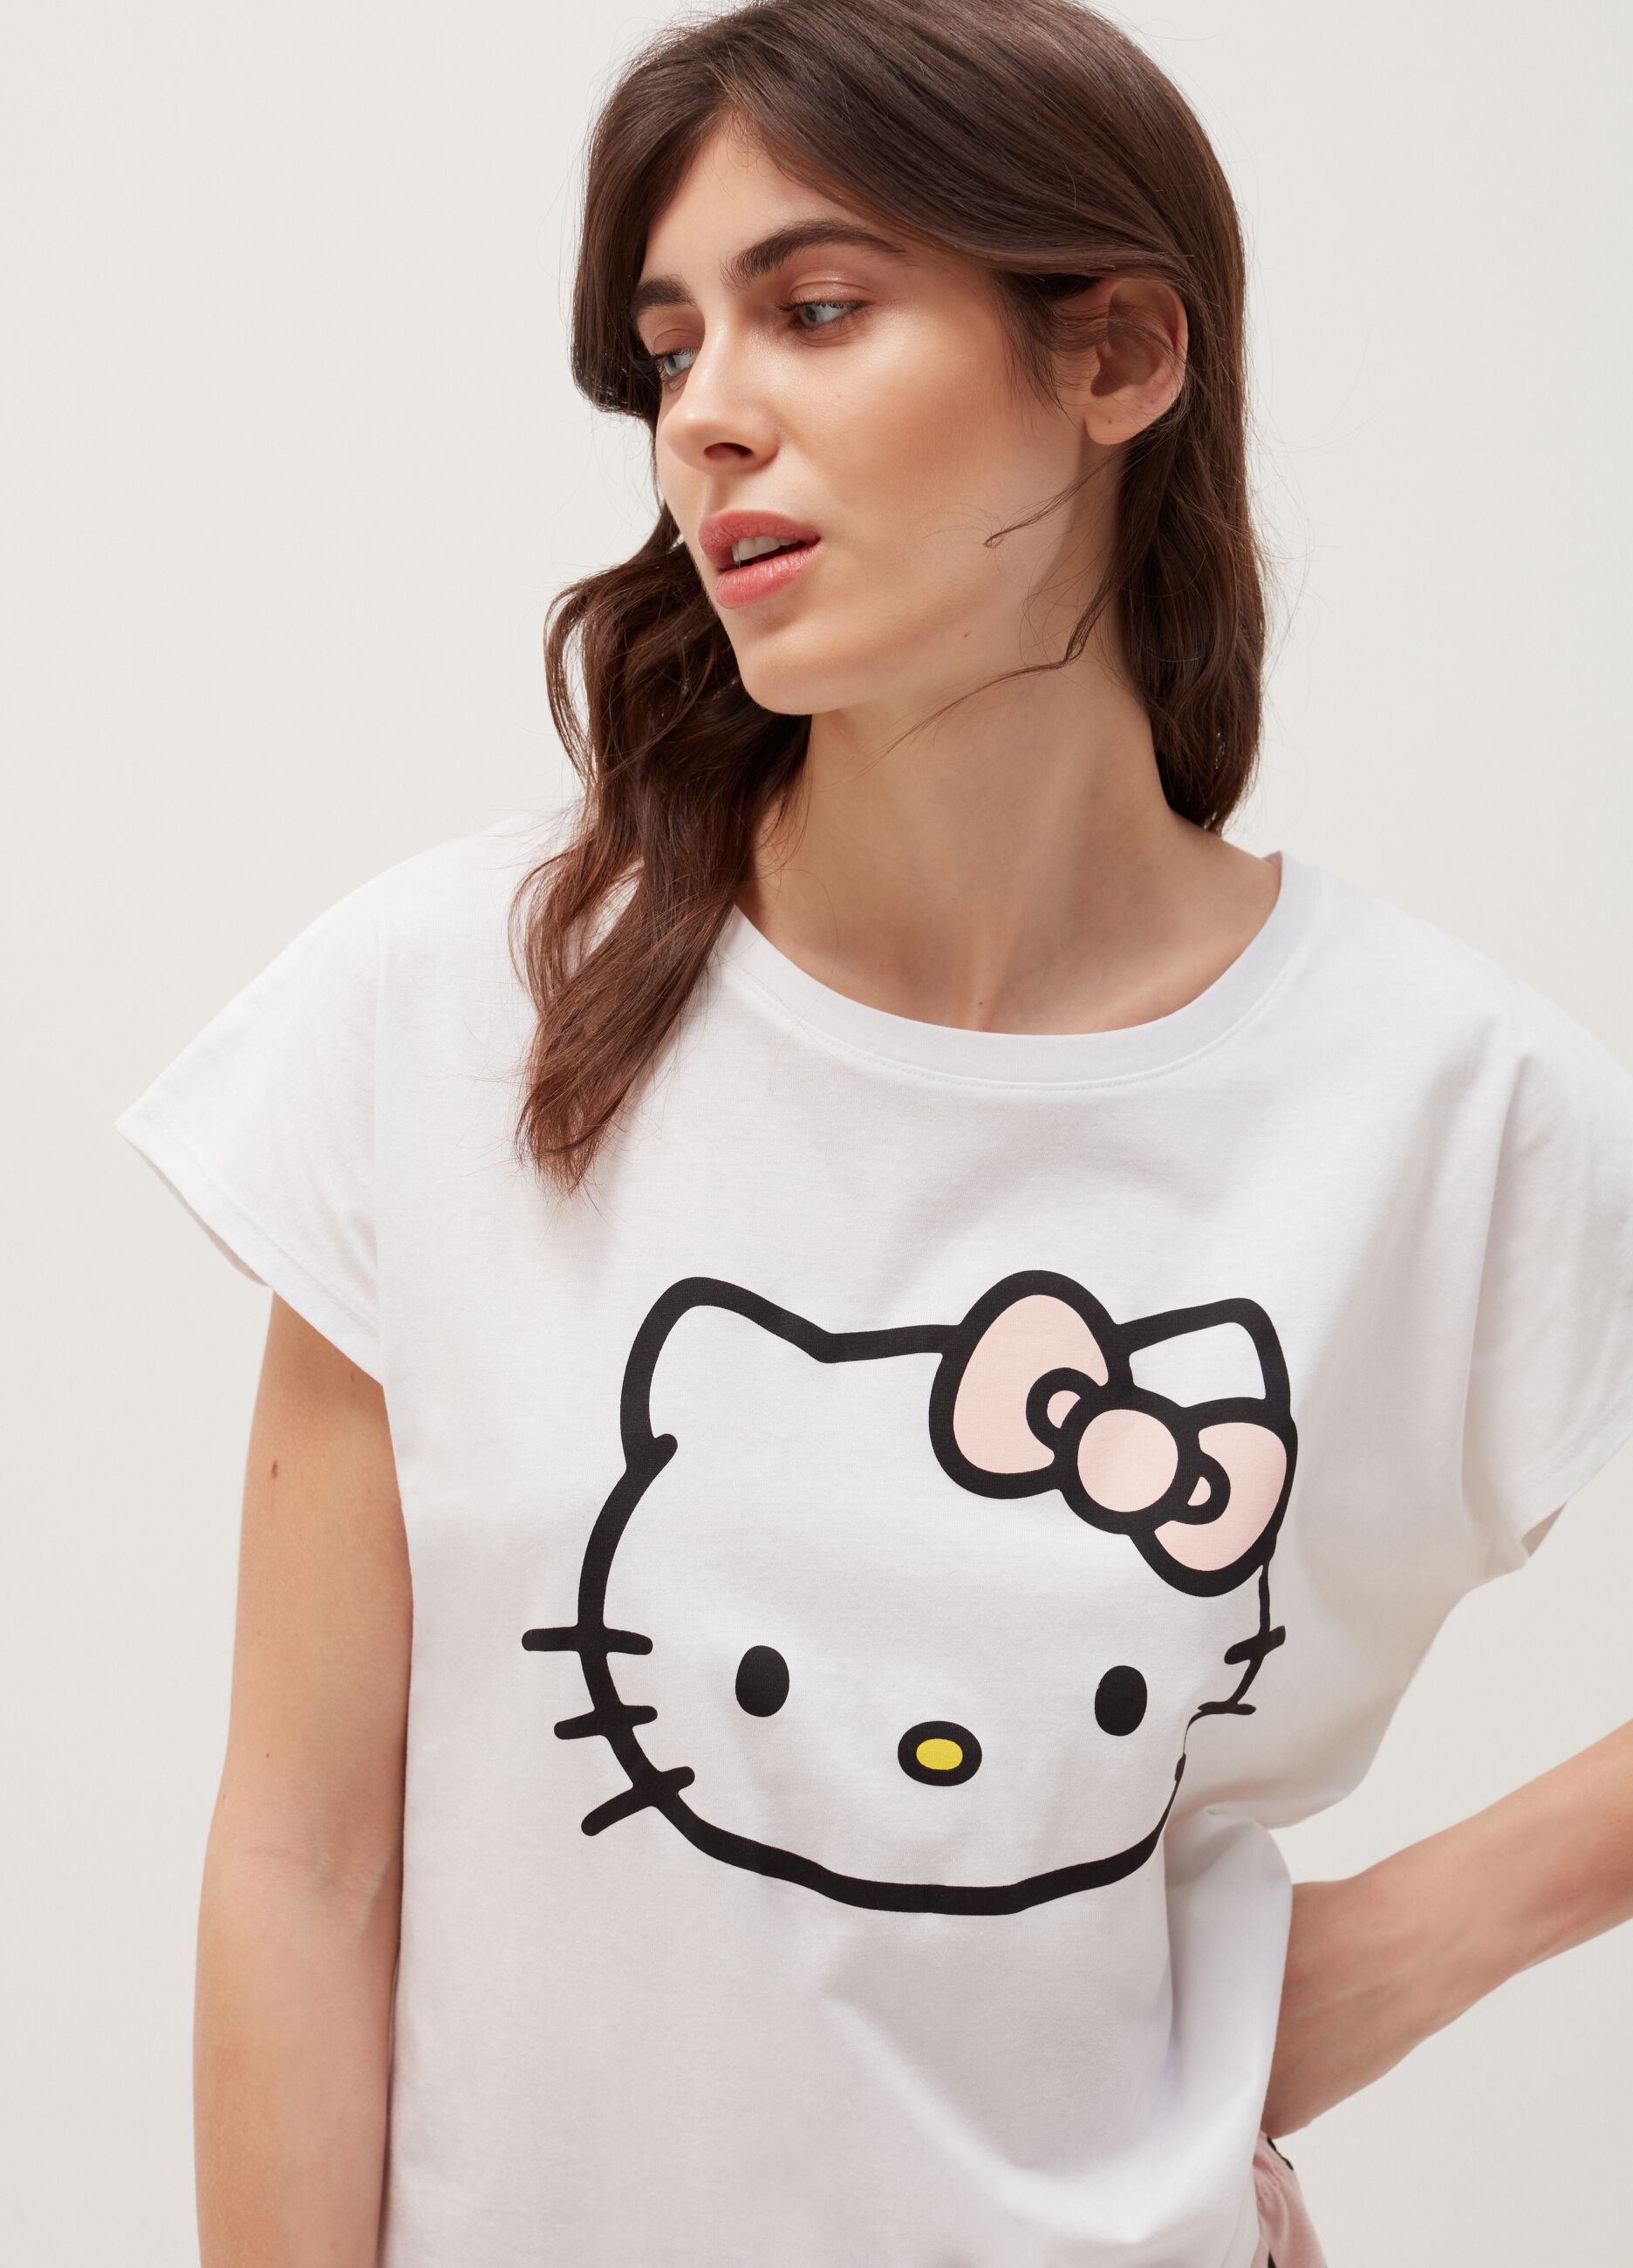 Cotton pyjamas with Hello Kitty print